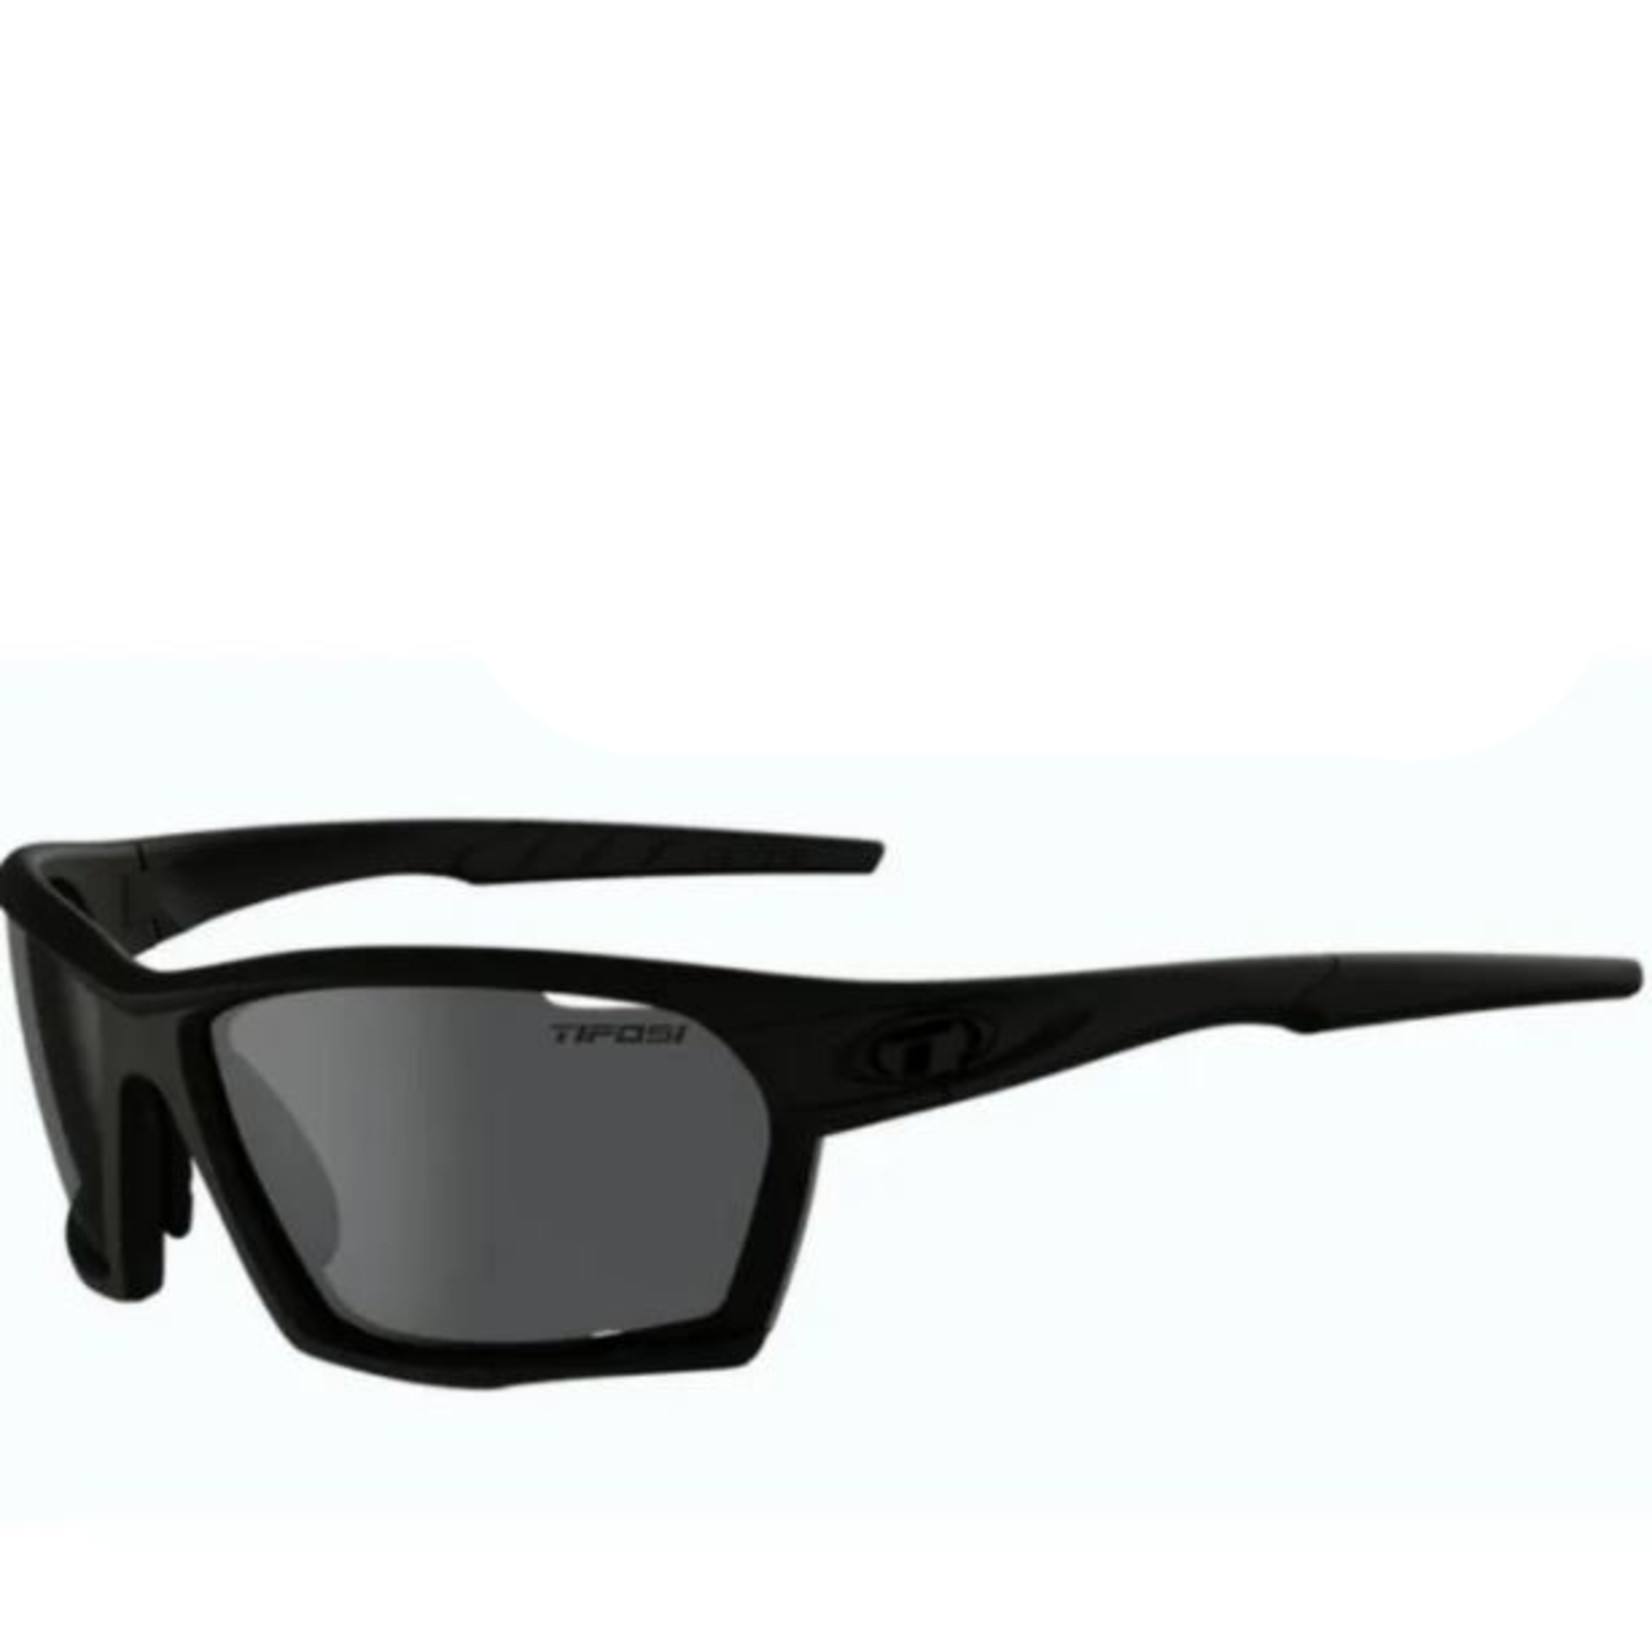 Tifosi Tifosi Cycling Sunglasses - Kilo - Cycling Sport Glasses - Smoke Polarized